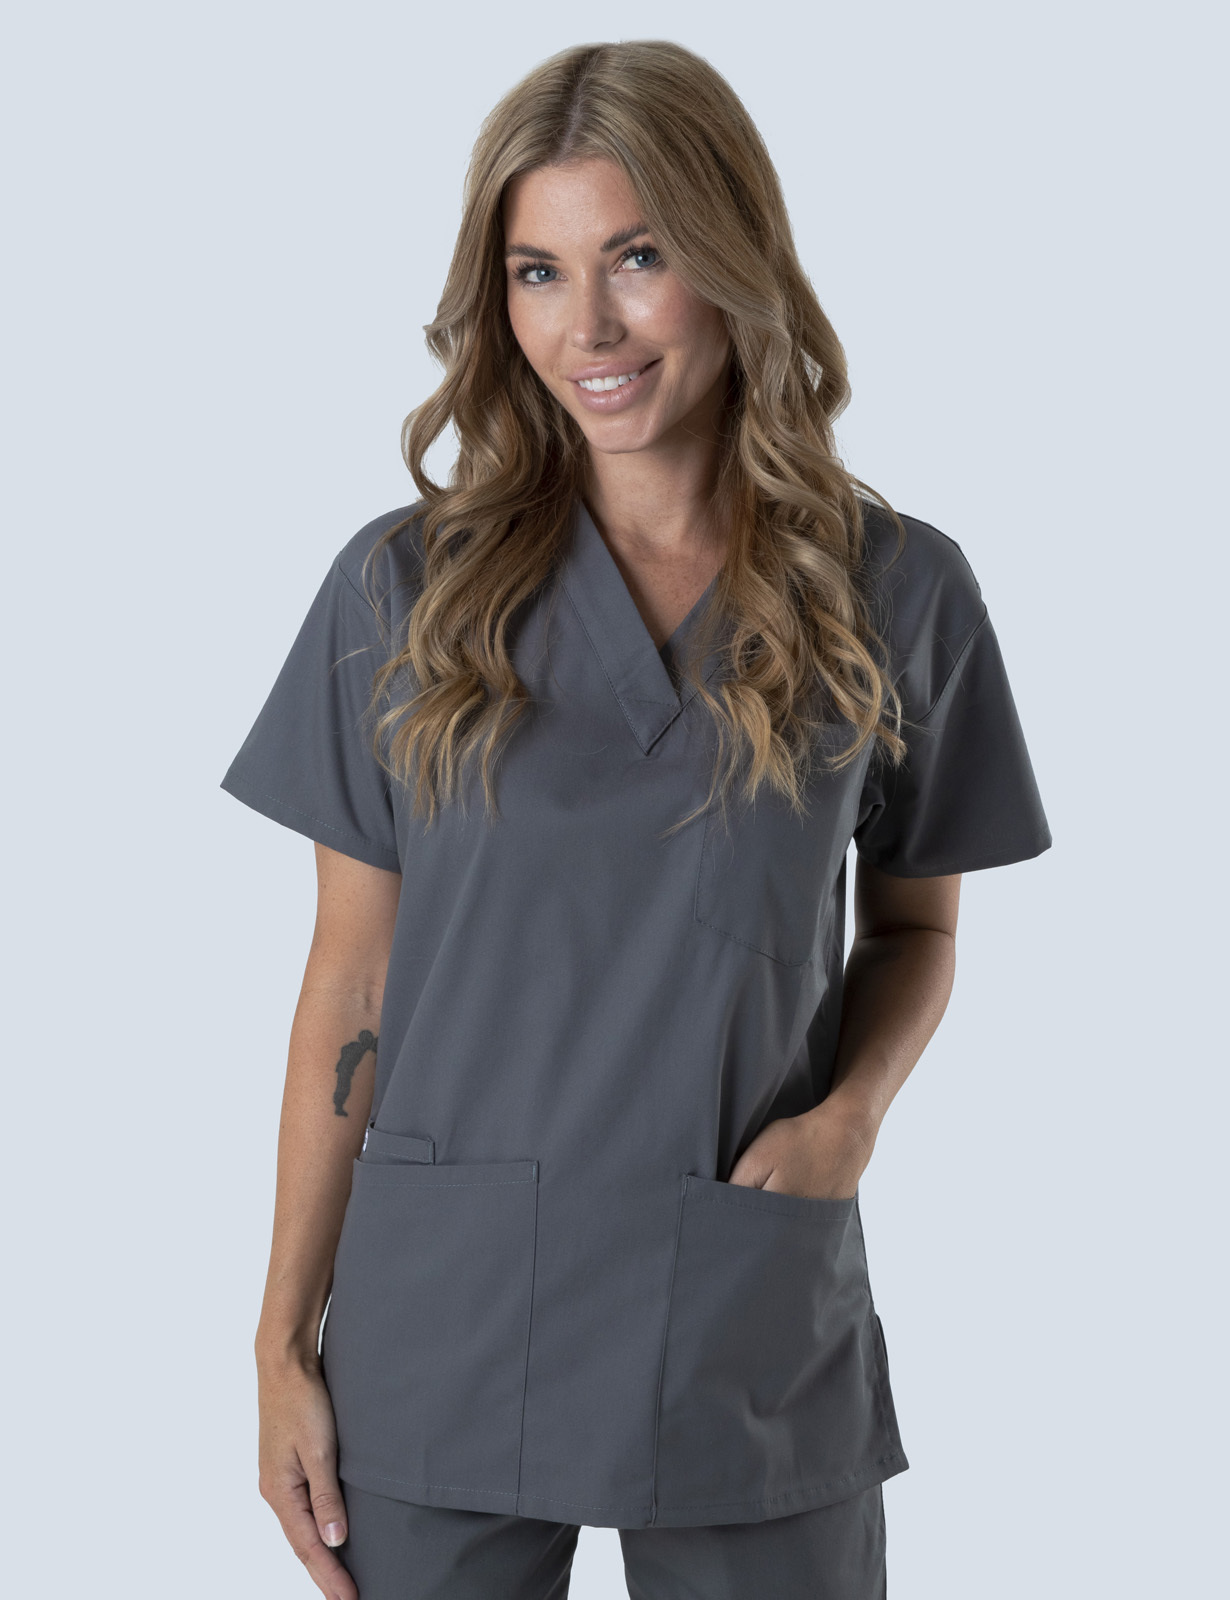 Queensland Children's Hospital Emergency Department Enrolled Nurse Uniform Top Bundle  (4 Pocket Top in Steel Grey incl Logos)